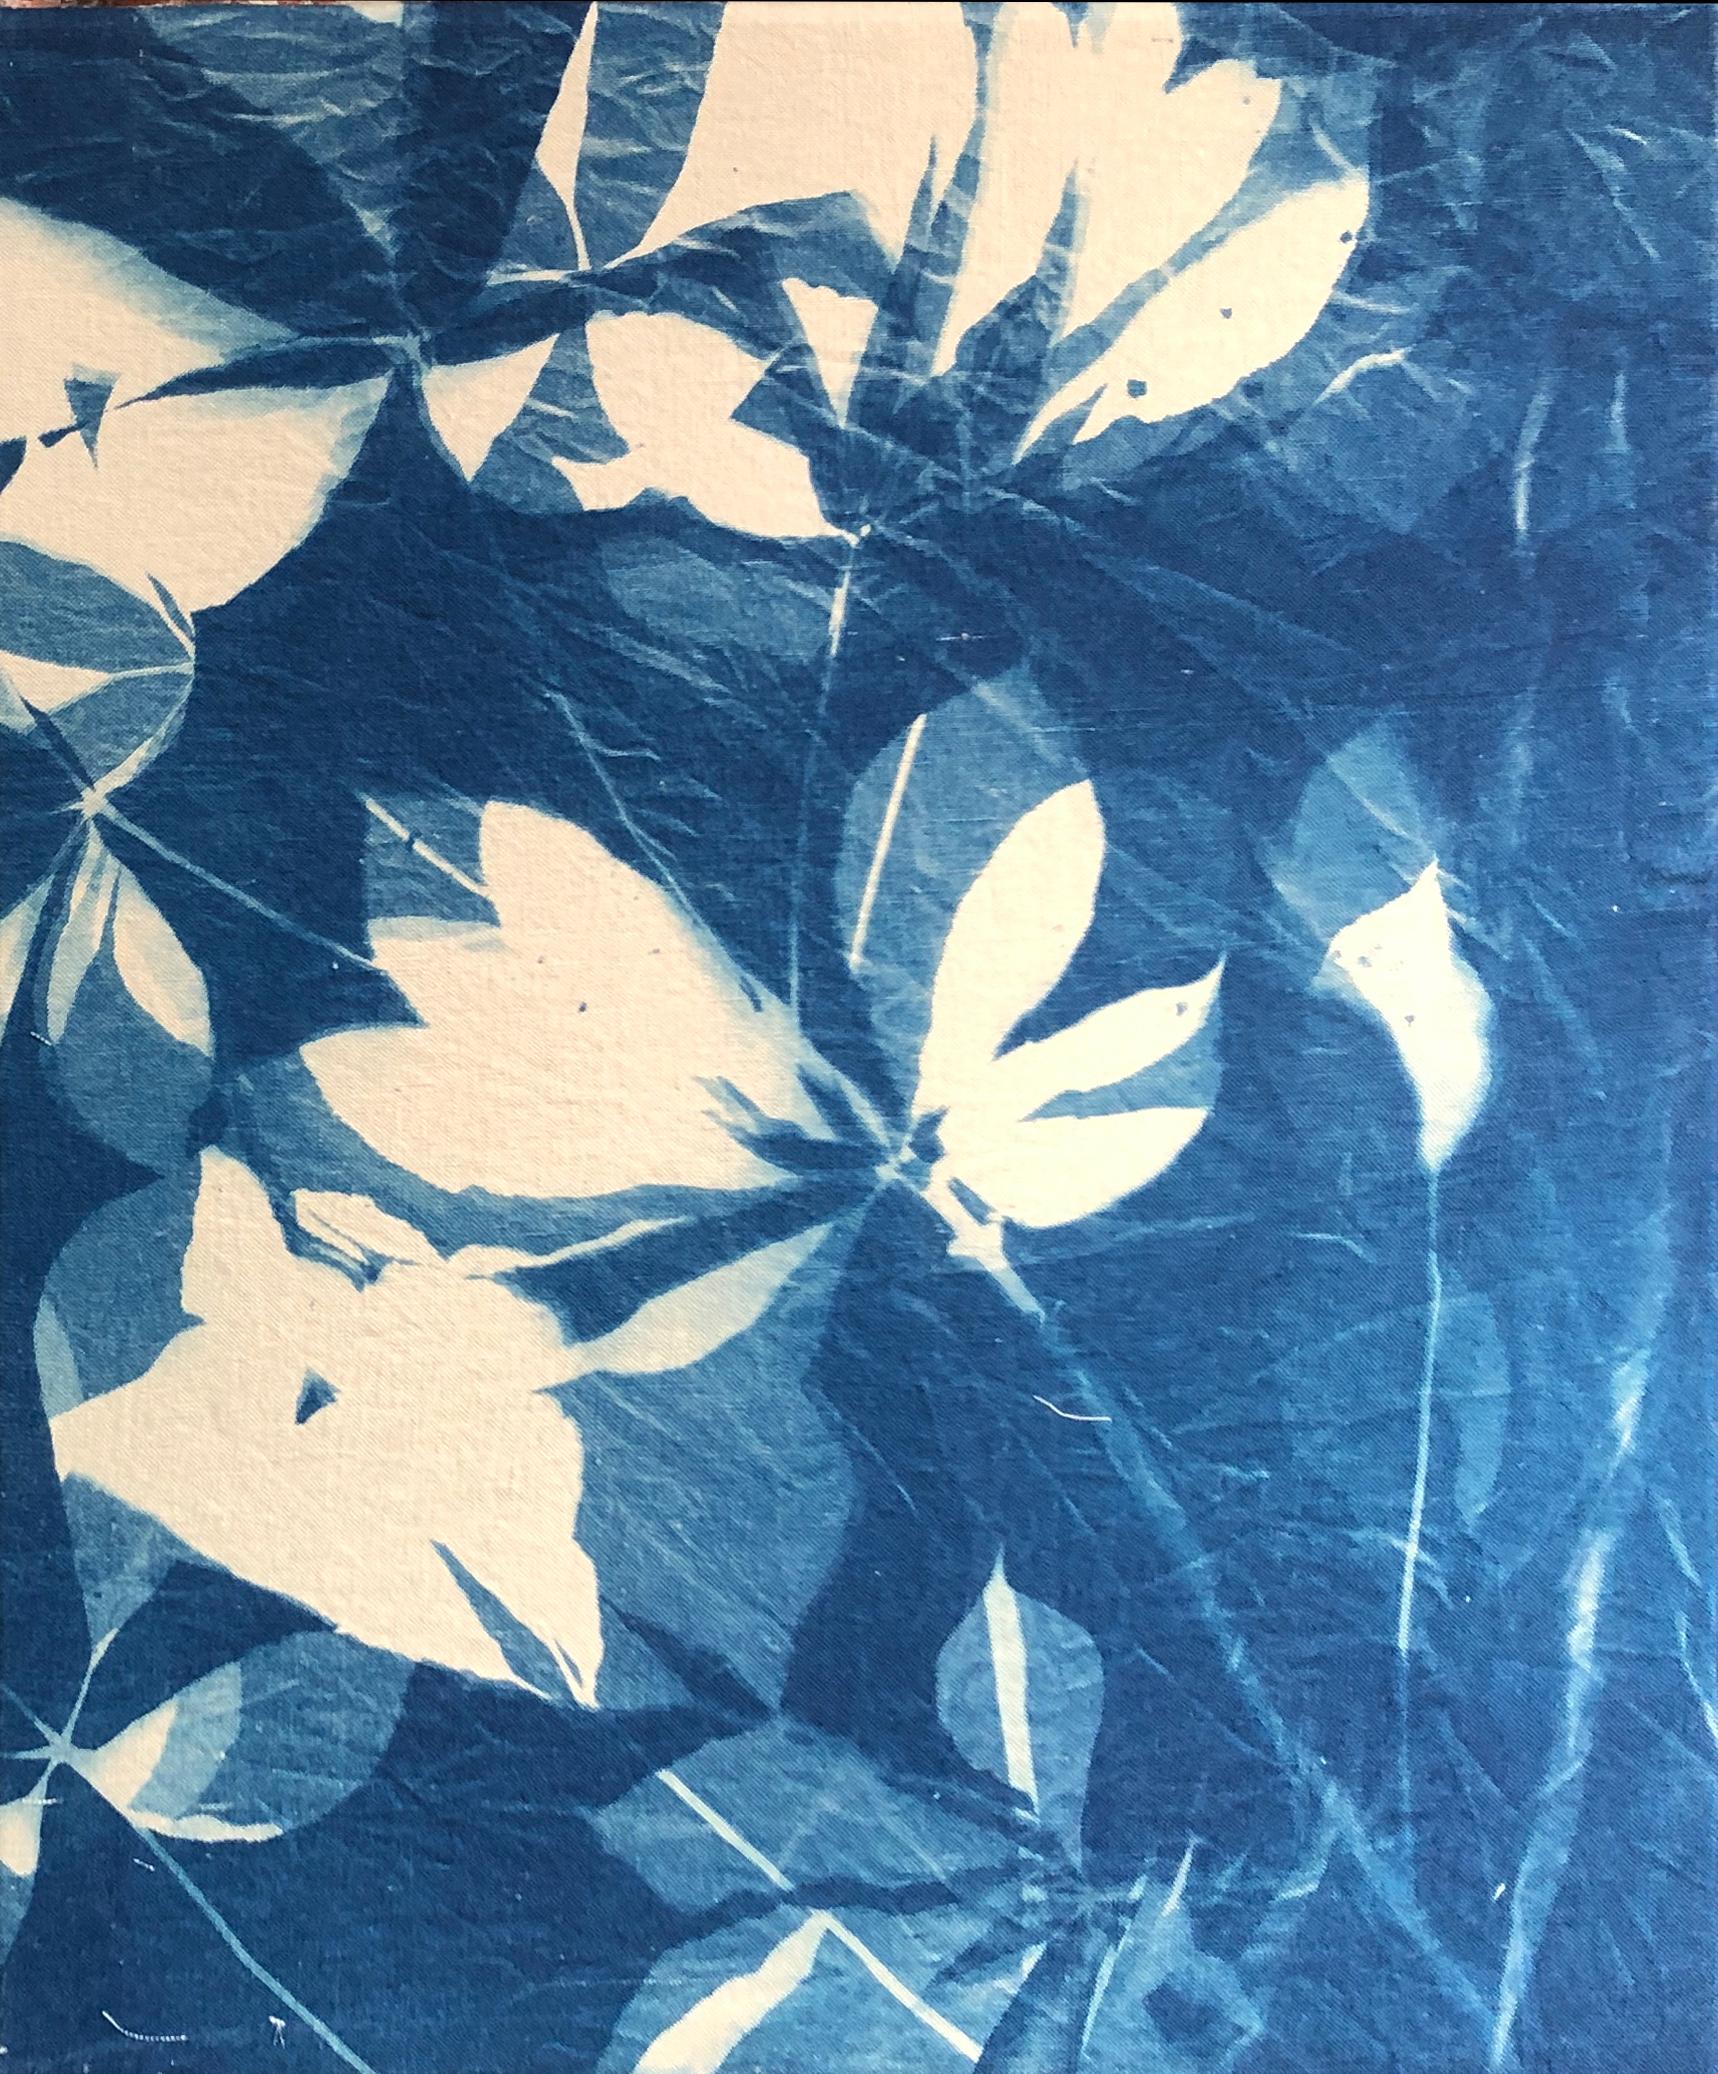 Marie Craig Landscape Photograph - "Buckeye", contemporary, tree, leaves, blue, cyanotype, photograph